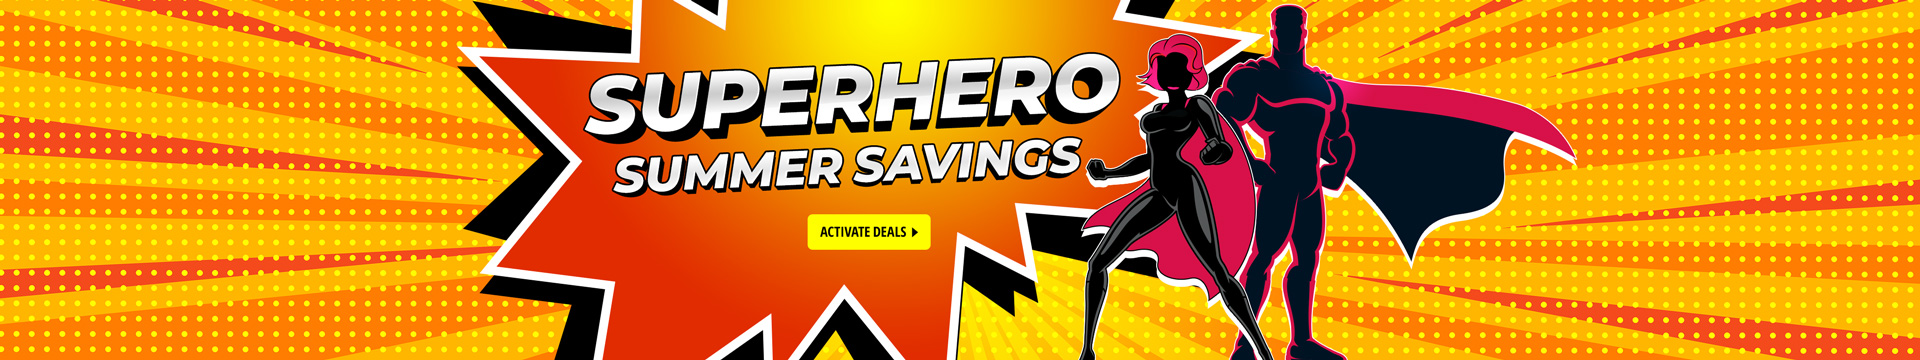 Superhero Summer Savings